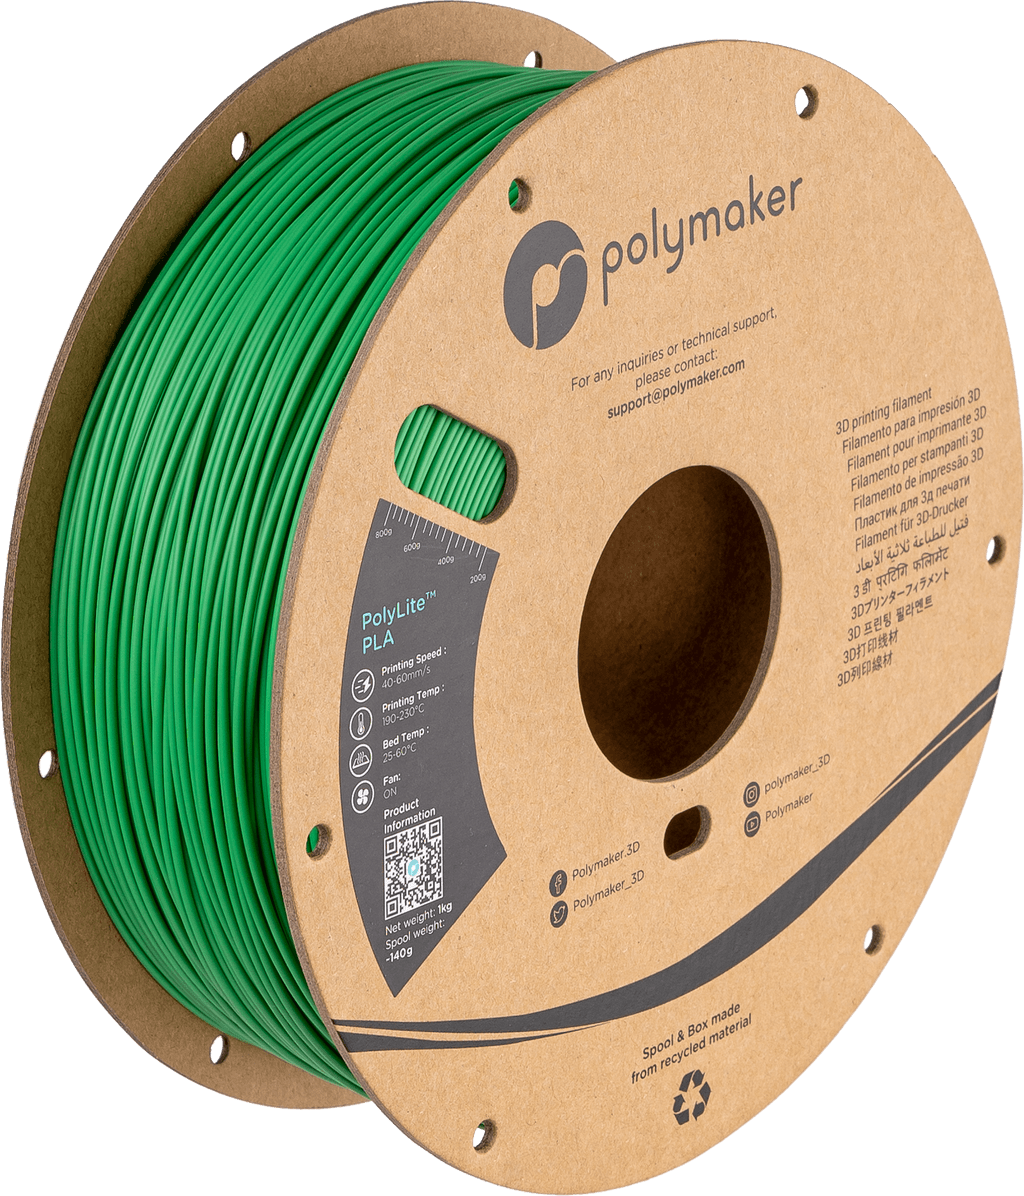 Polymaker PolyTerra PLA 3D Printer Filament 1KG 1.75mm